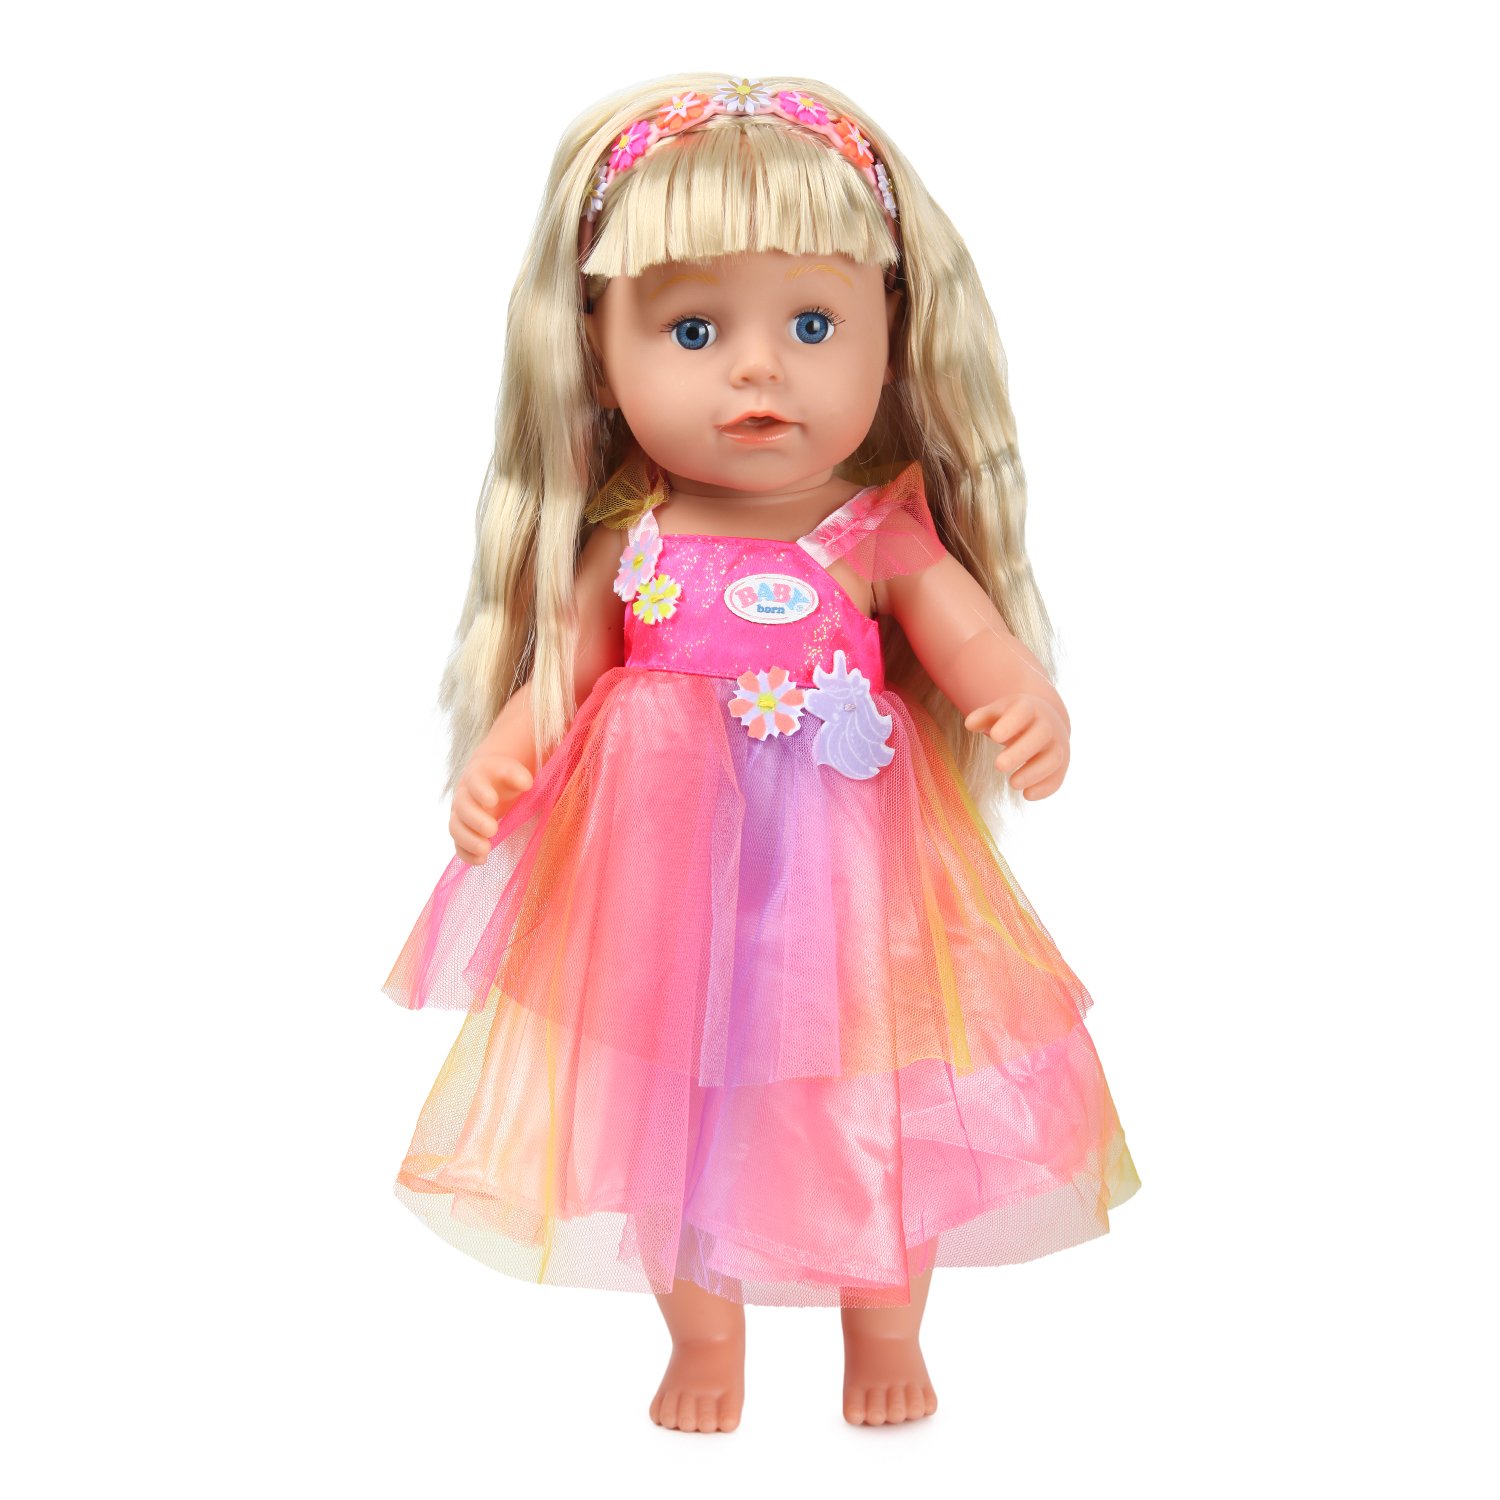 Кукла Сестричка BABY born Soft Touch в платье единорога, 43 см